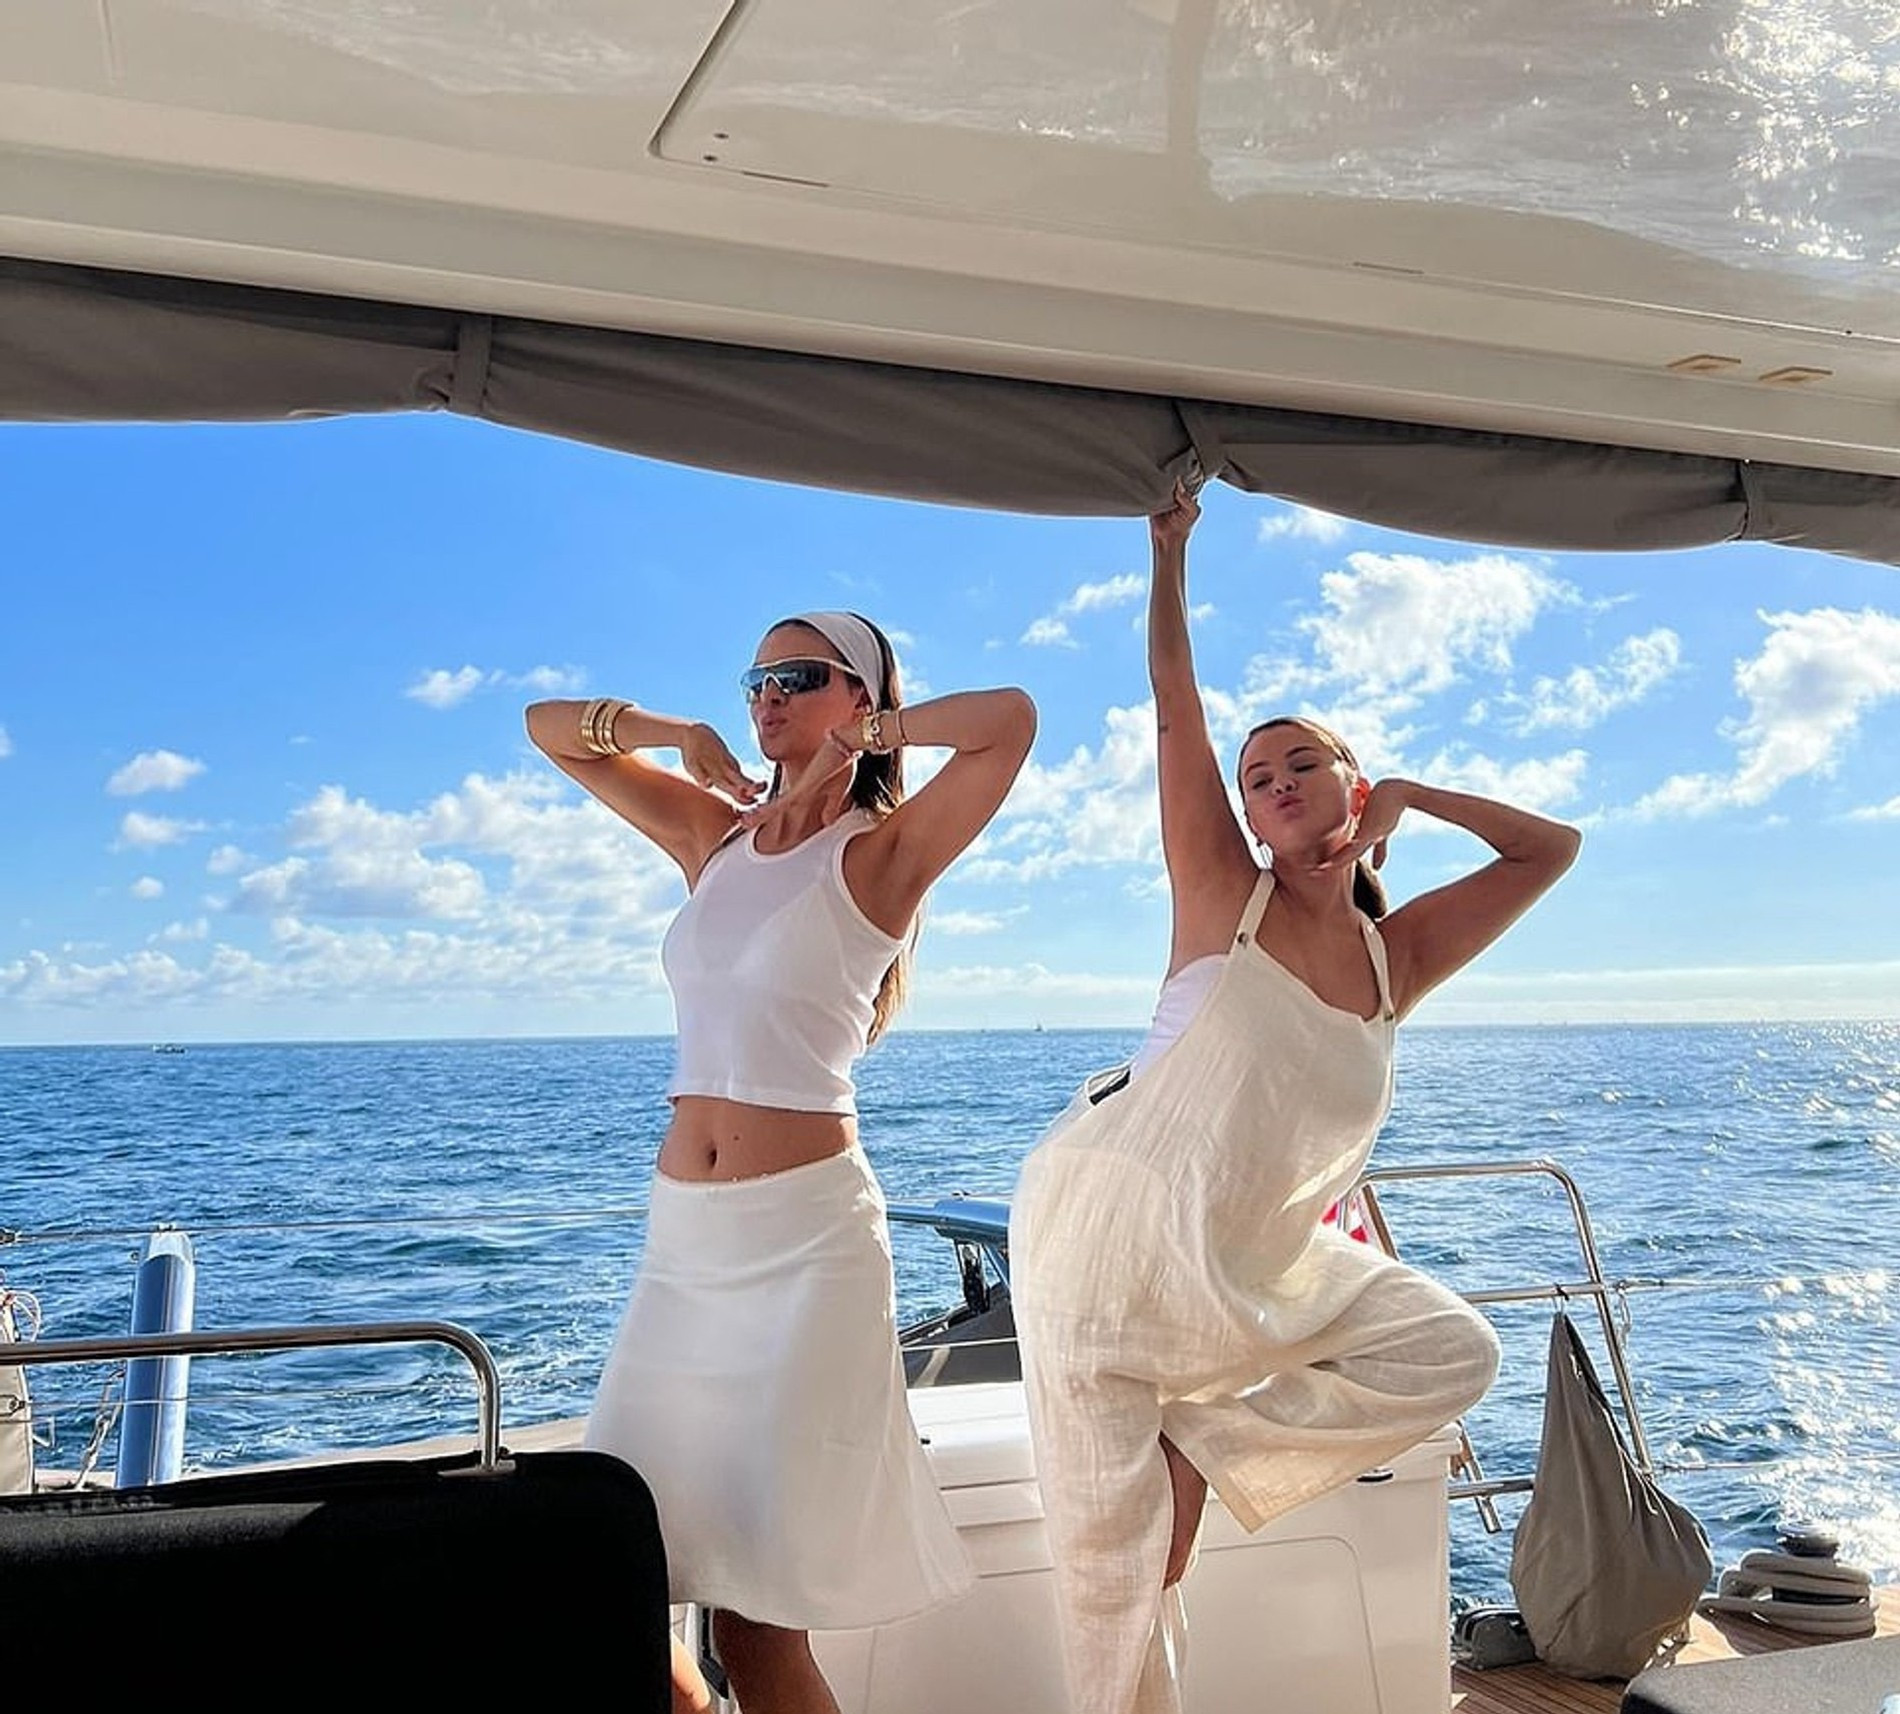 Никола Пельтц и Селена Гомес на яхте в Мексике
Фото: Daily Mail